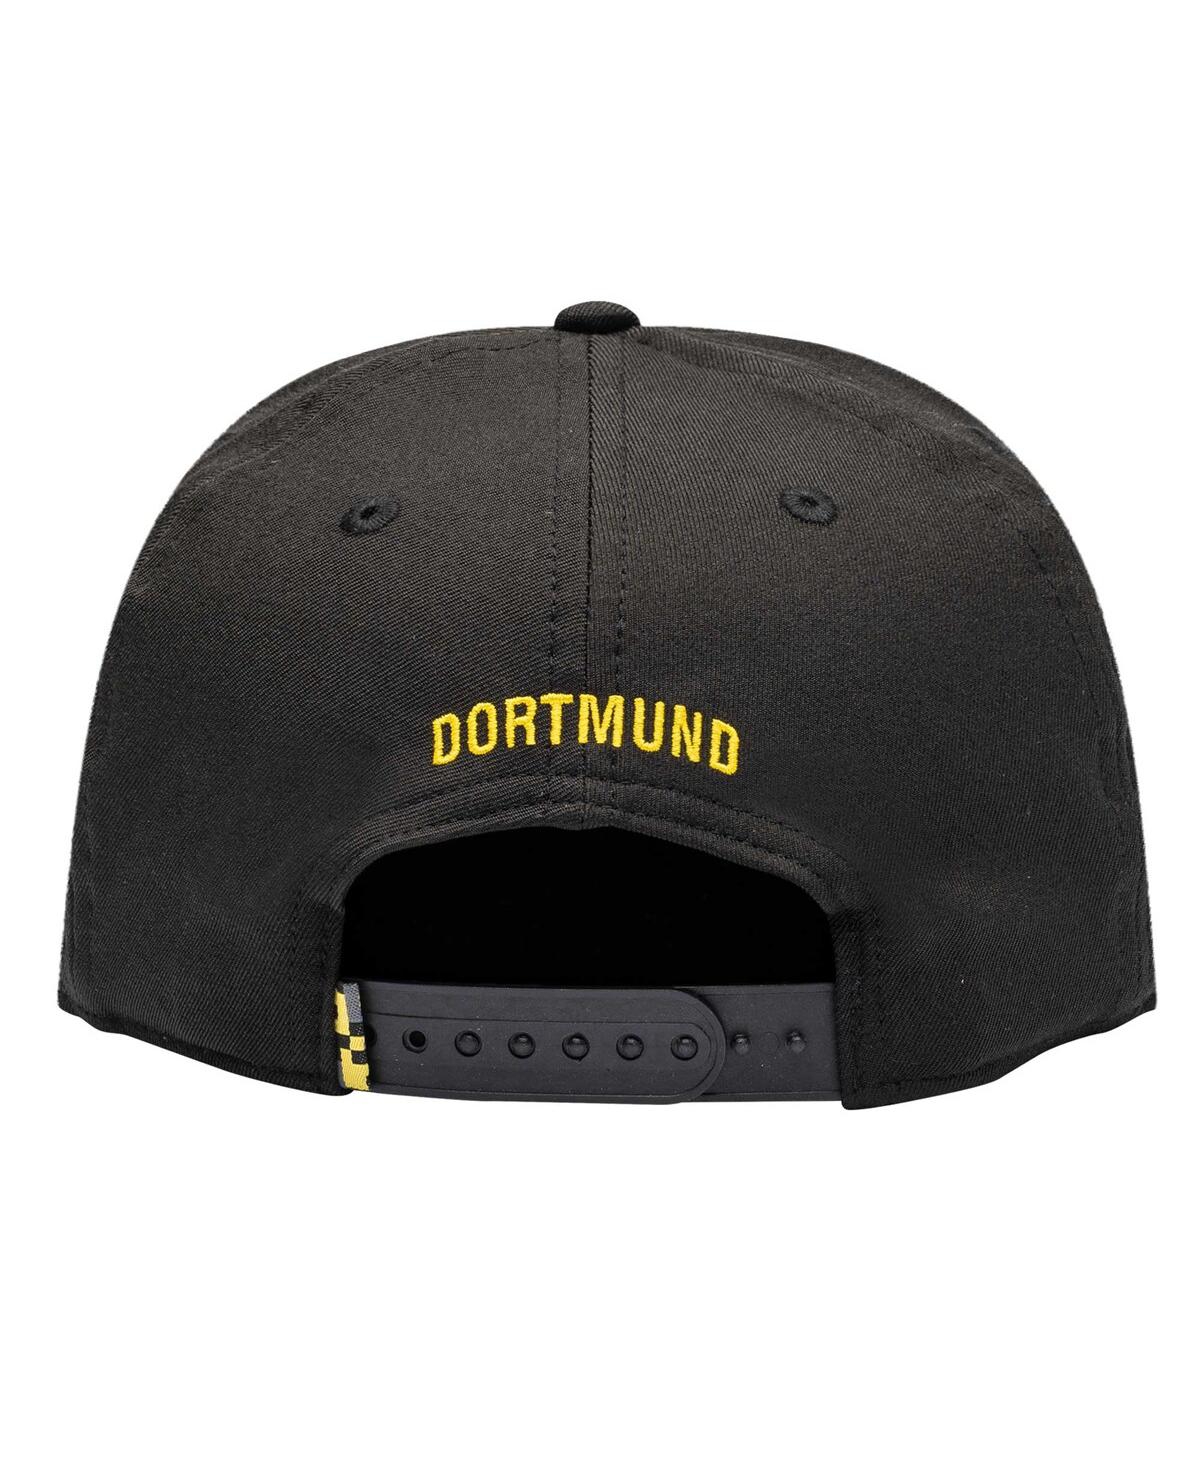 Shop Fan Ink Men's  White Borussia Dortmund Avalanche Snapback Hat